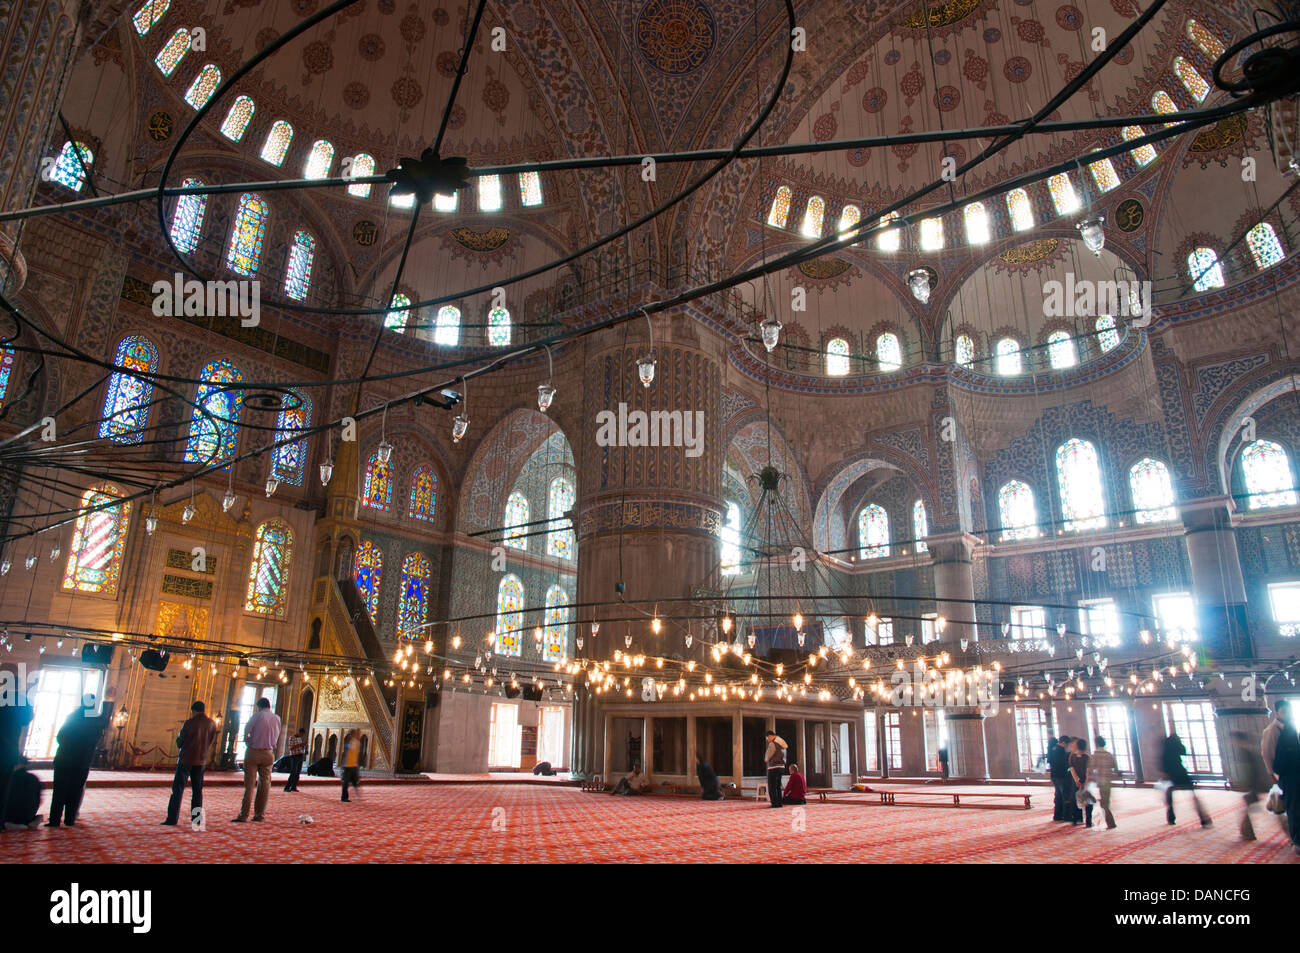 Sultan Ahmed Camii, blaue Moschee, Interieur. Istanbul. Turkei Stockfoto